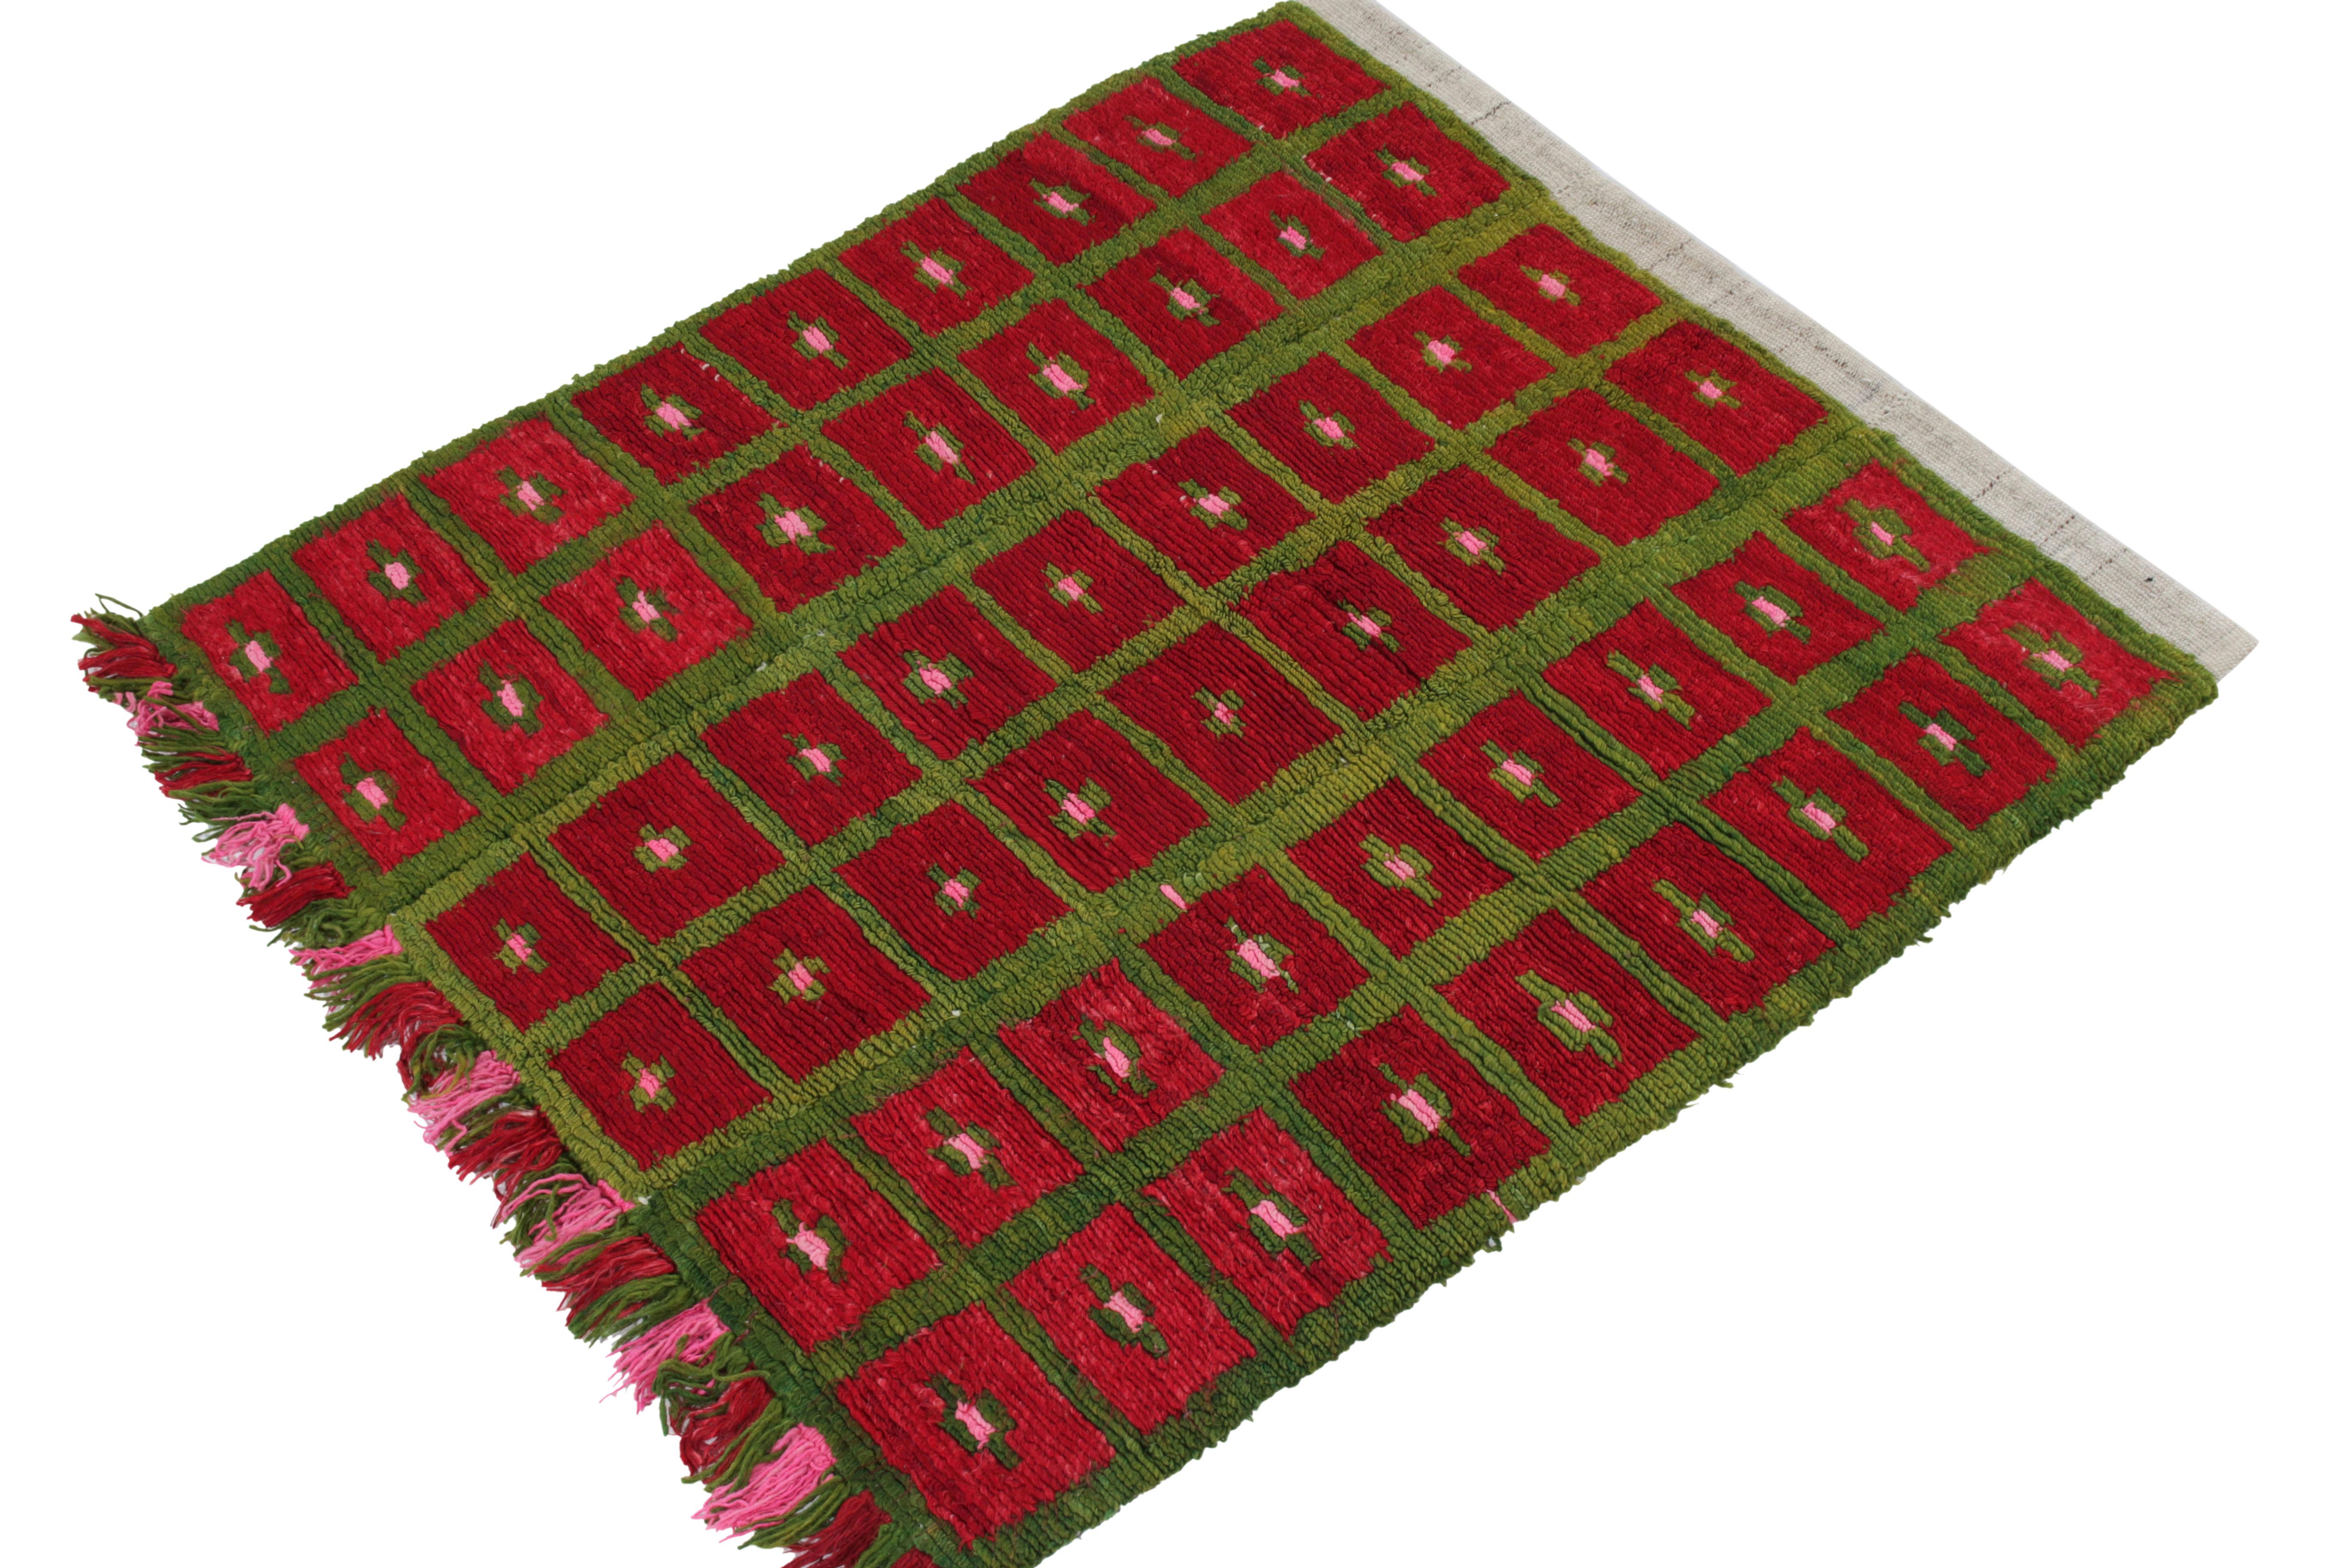 Tribal 1950s Vintage Tulu Rug in Red, Green, Pink Geometric Pattern by Rug & Kilim For Sale